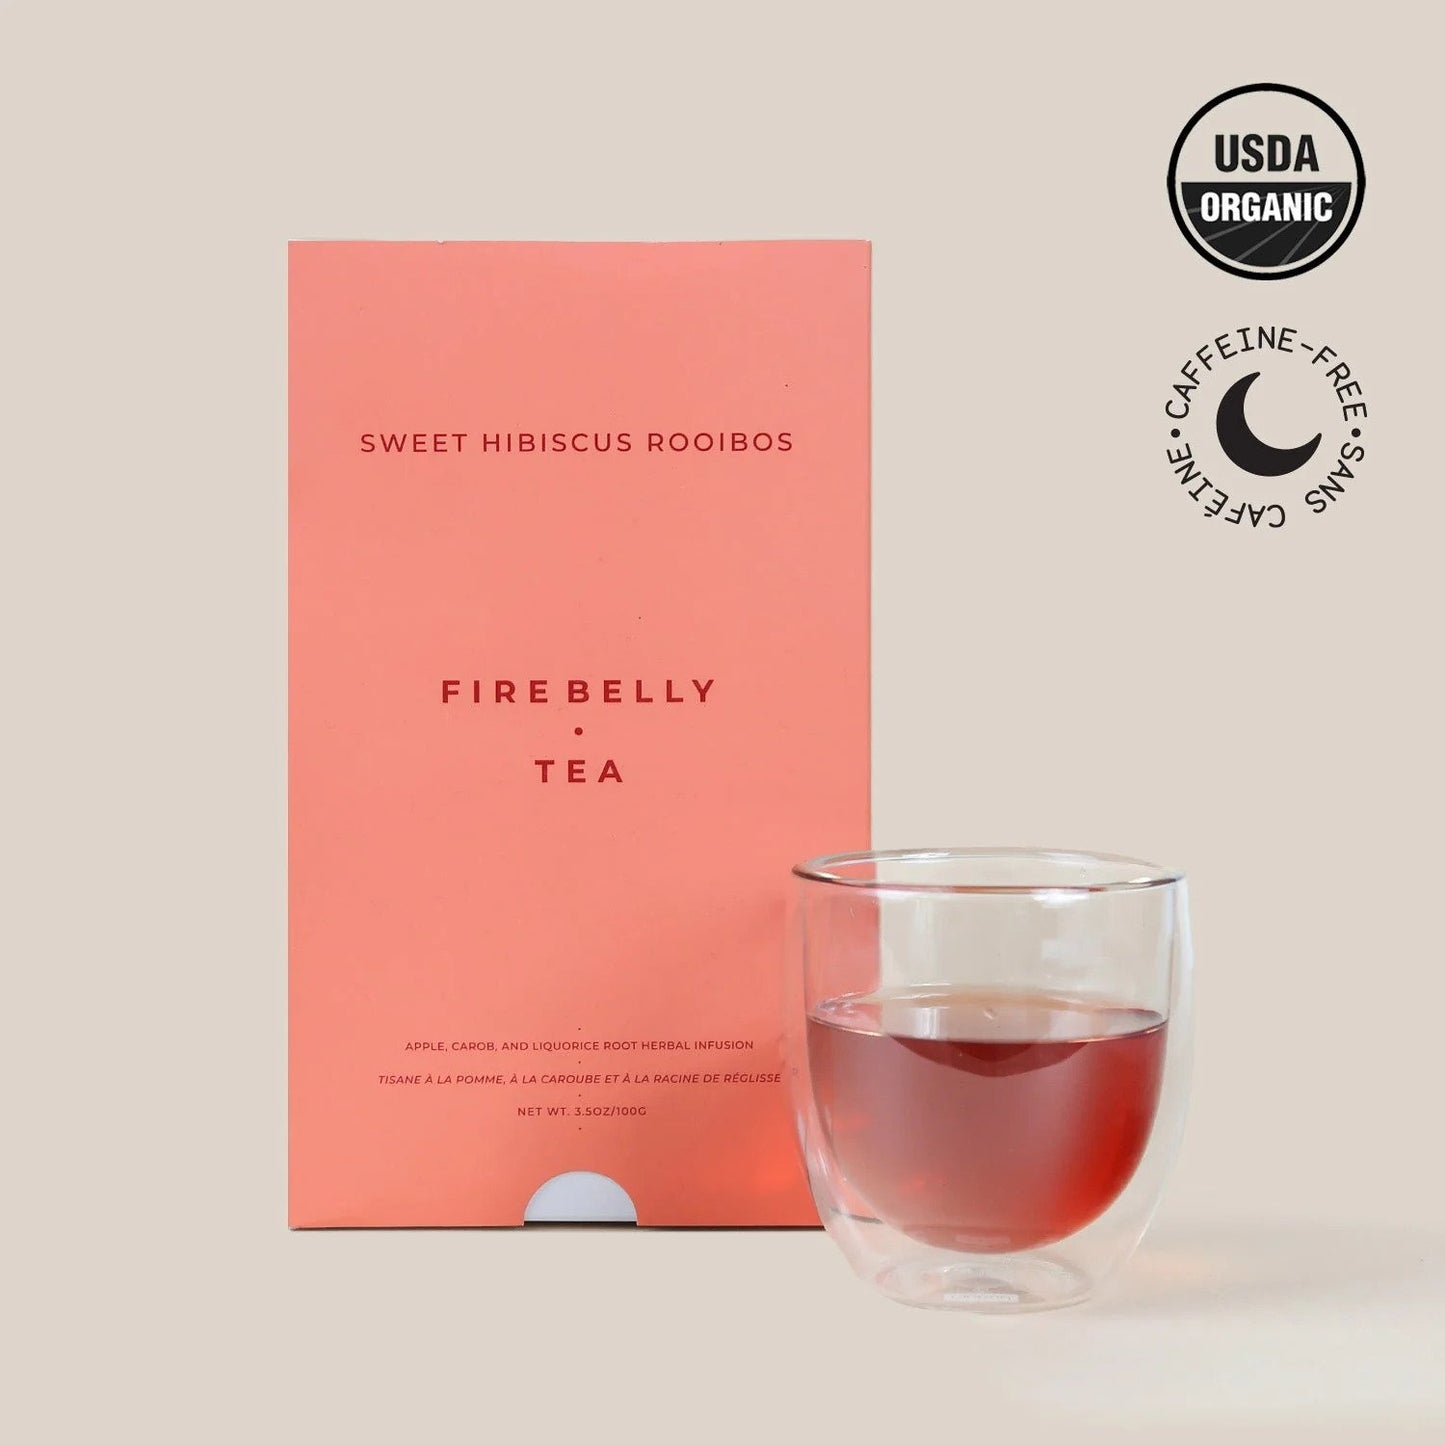 FireBelly Tea - SWEET HIBISCUS ROOIBOS - 100g